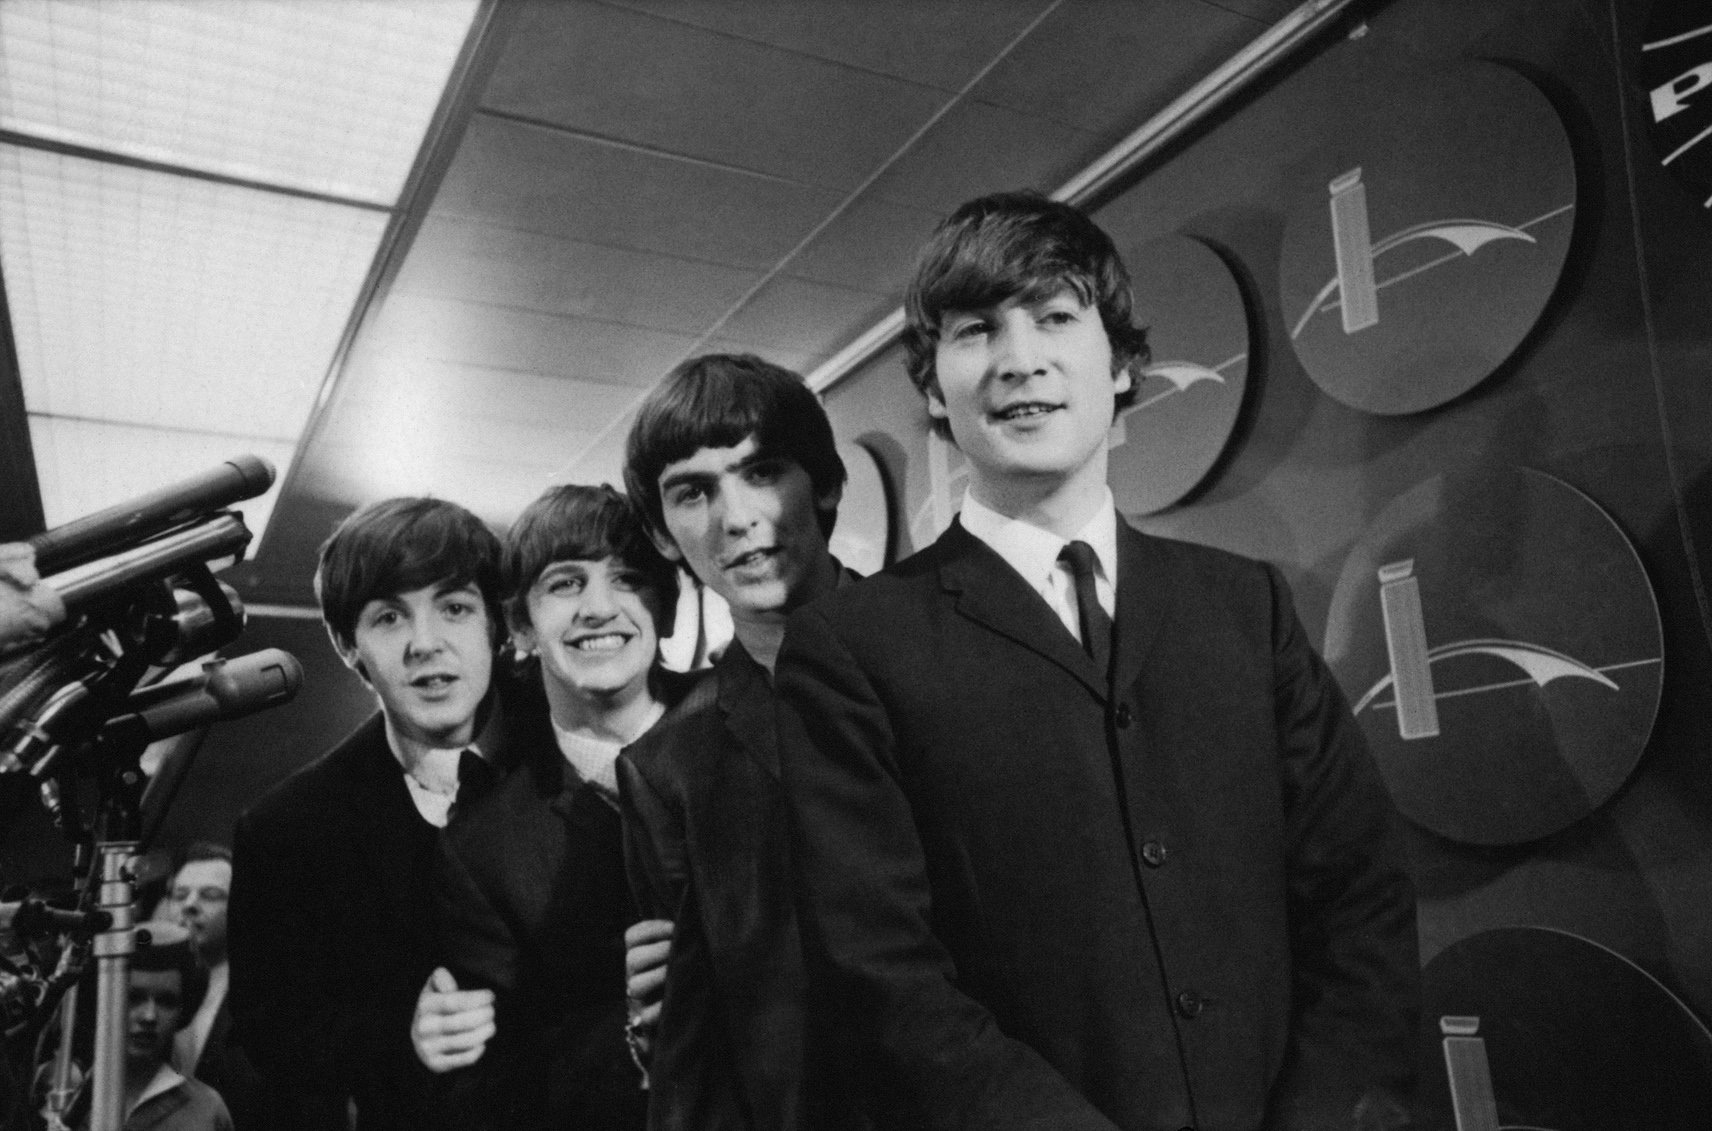 The Beatles arrive at John F. Kennedy International Airport